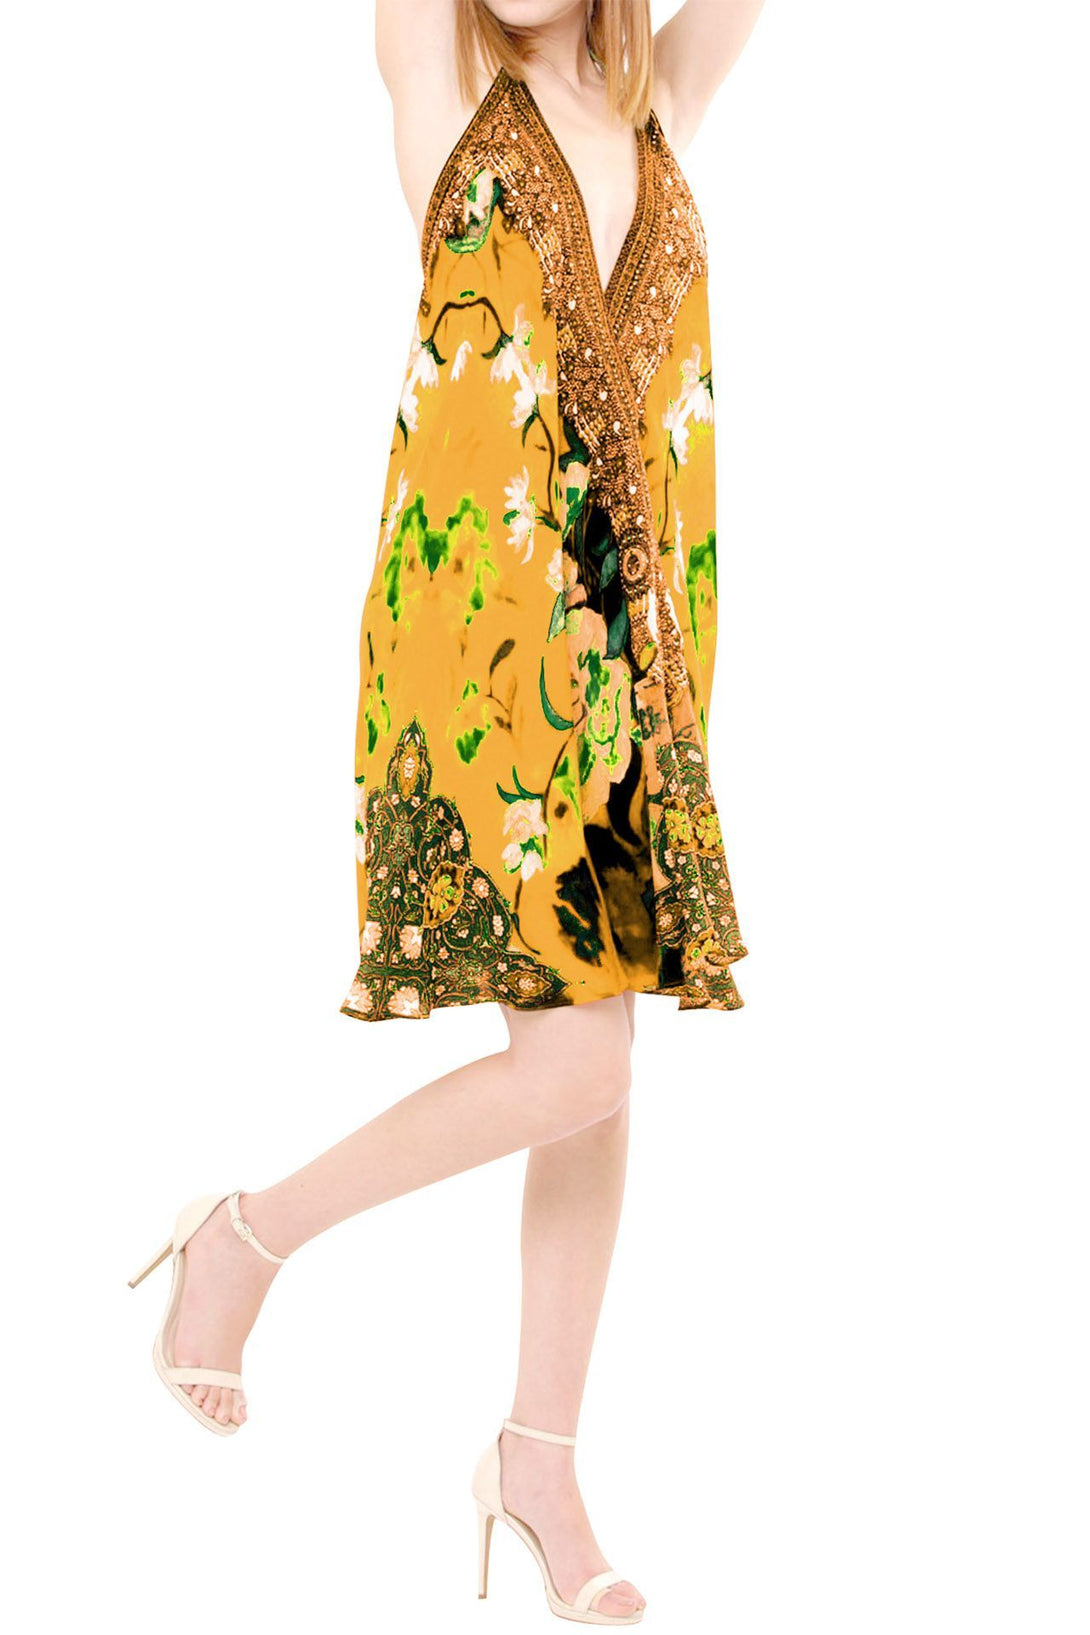 short yellow summer dress, Shahida Parides, sexy short dresses, short silk dress,